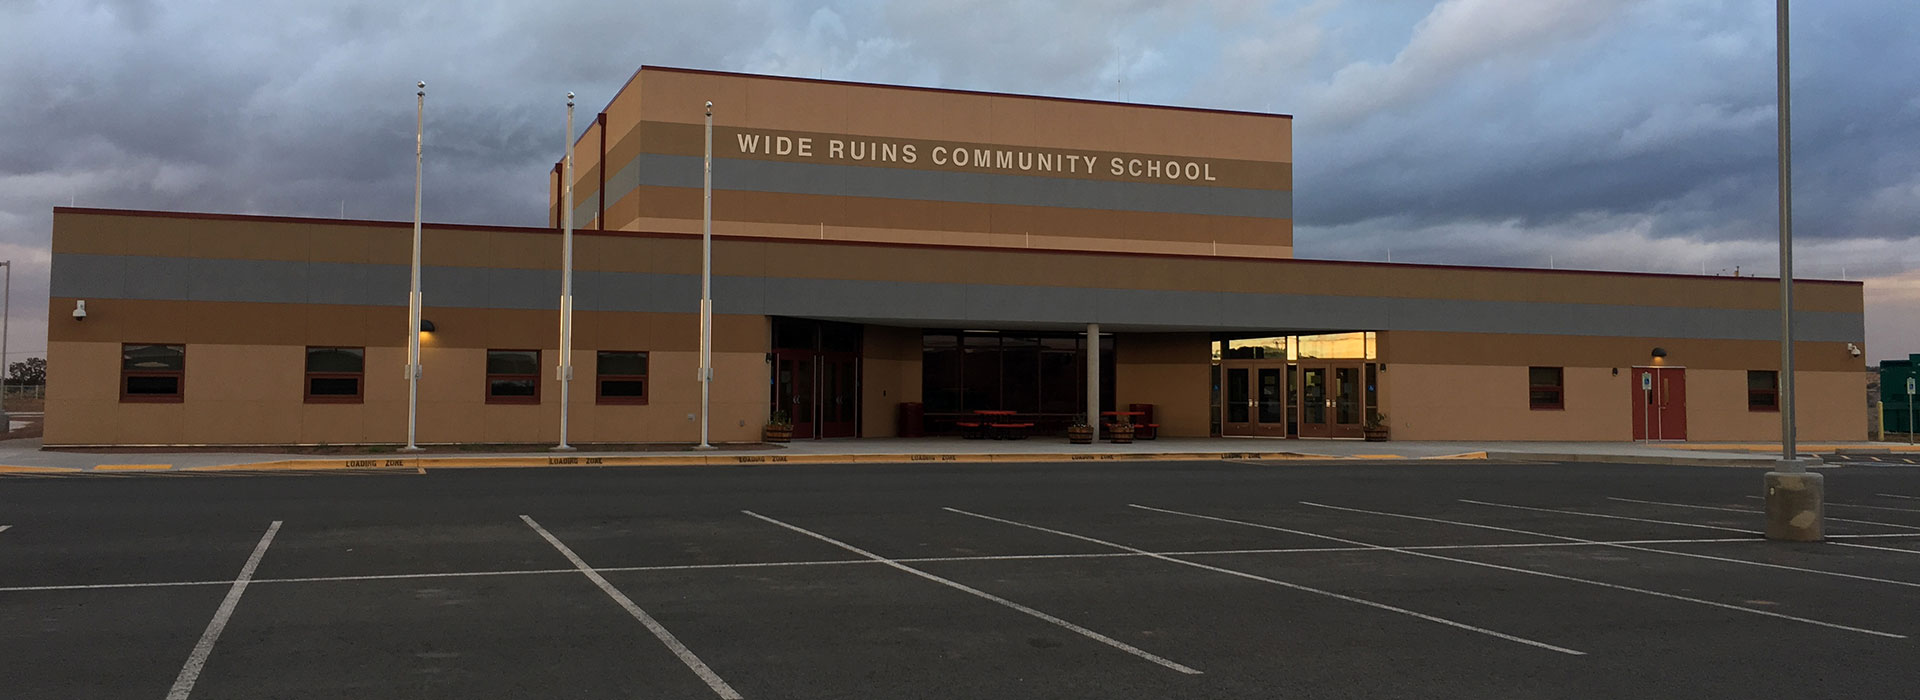 Wide Ruins Community School